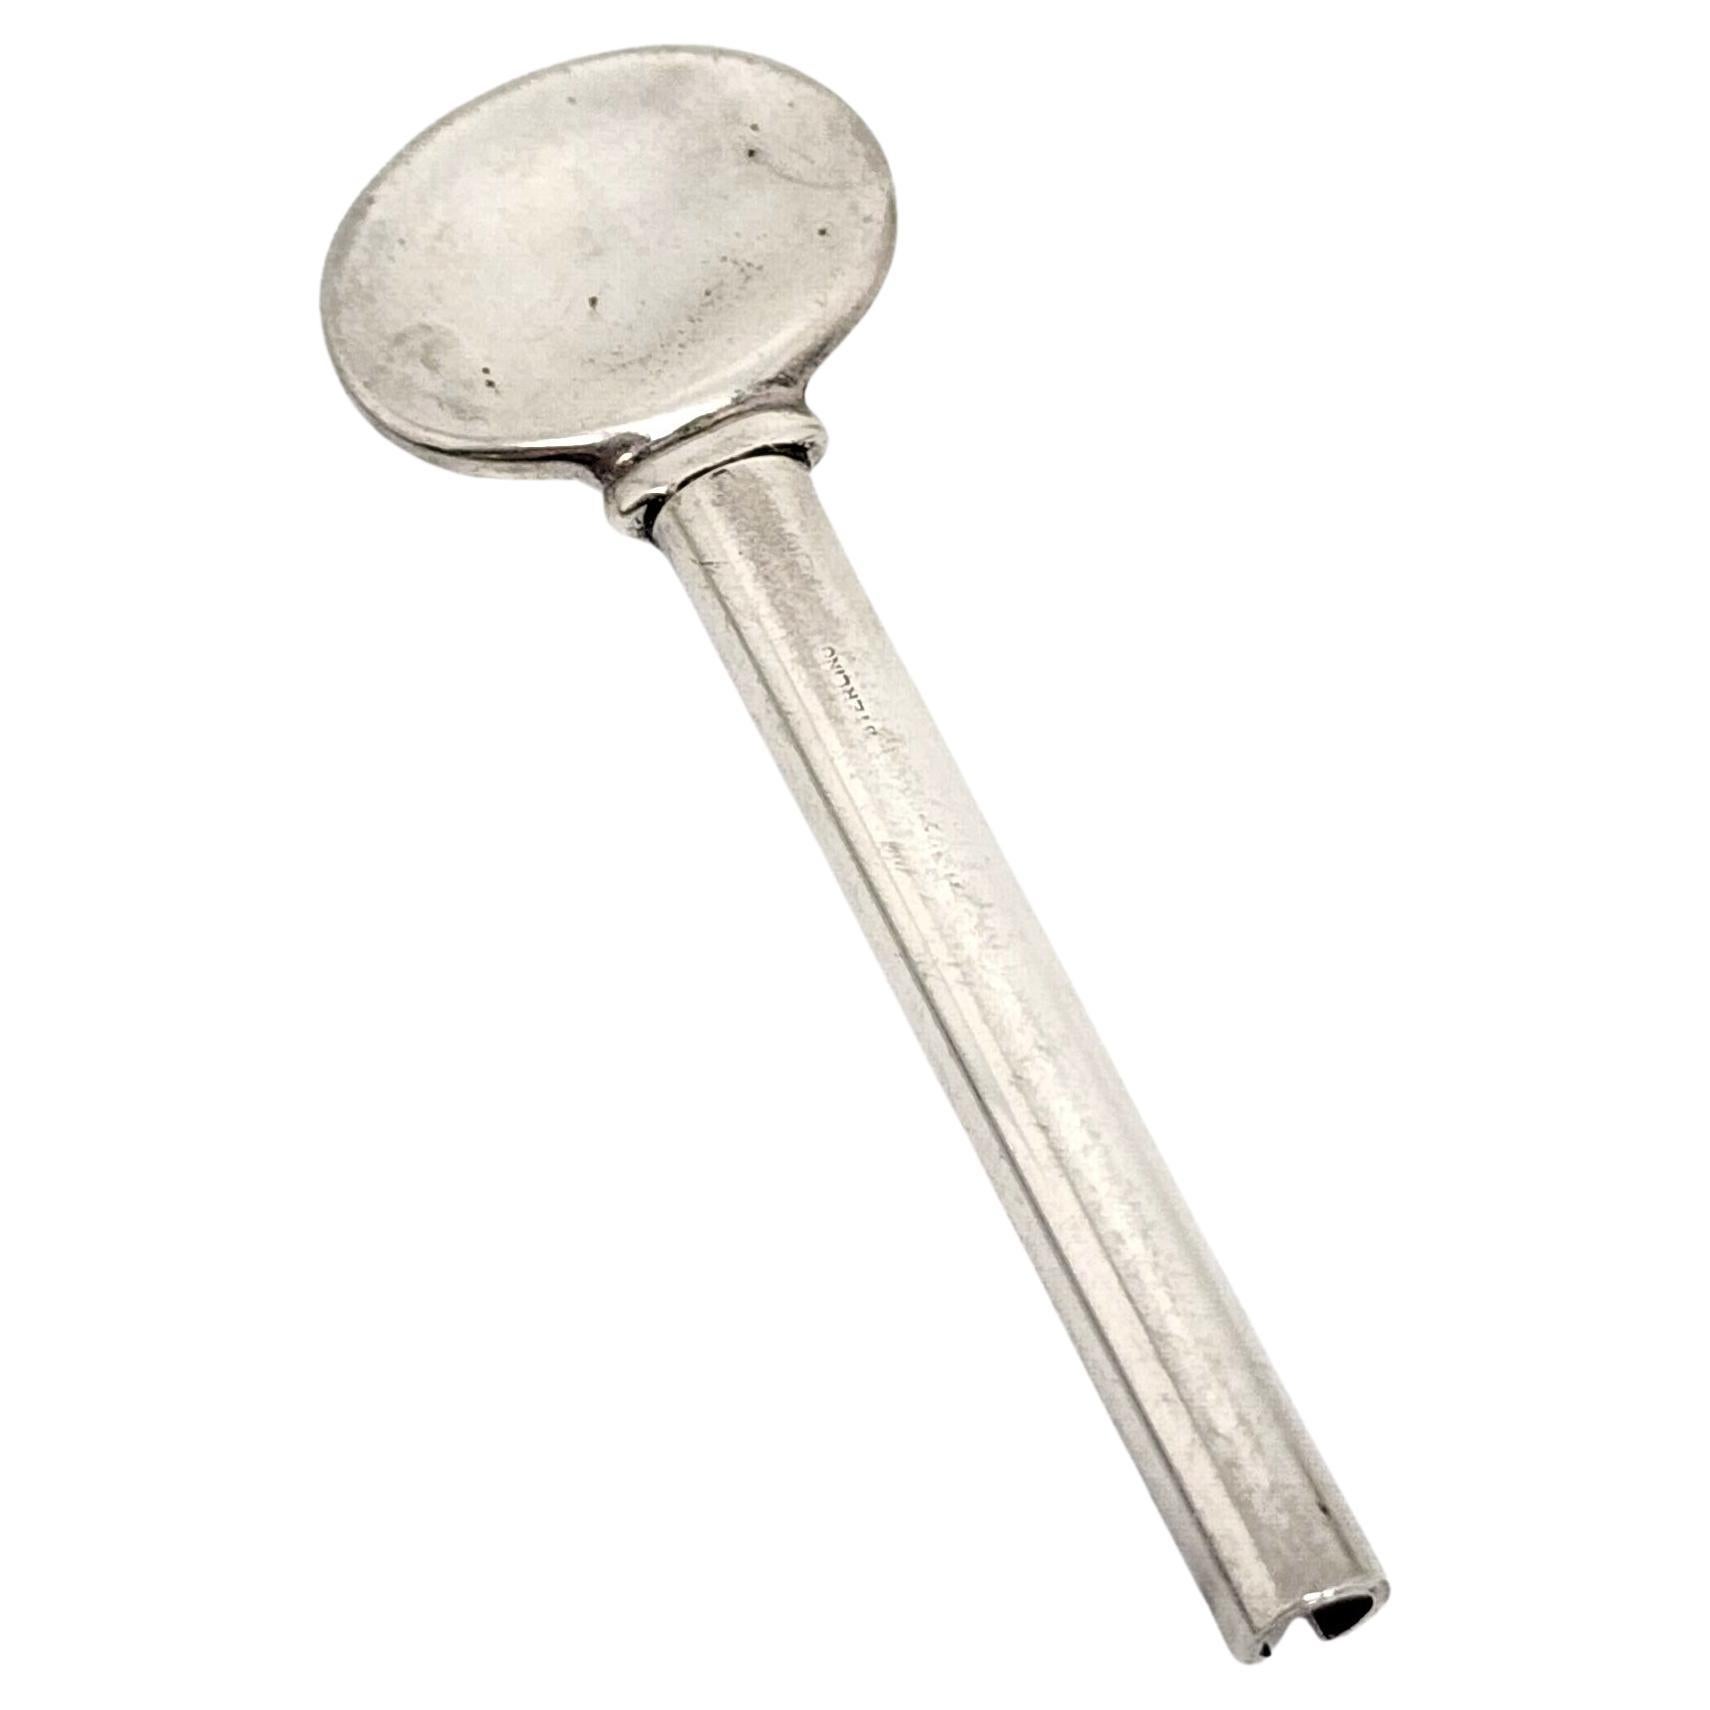 Tiffany & Co Sterlingsilber Zahnpaste-Röschen-Schlüssel mit Schnabelverschluss aus Sterlingsilber (B) #13036